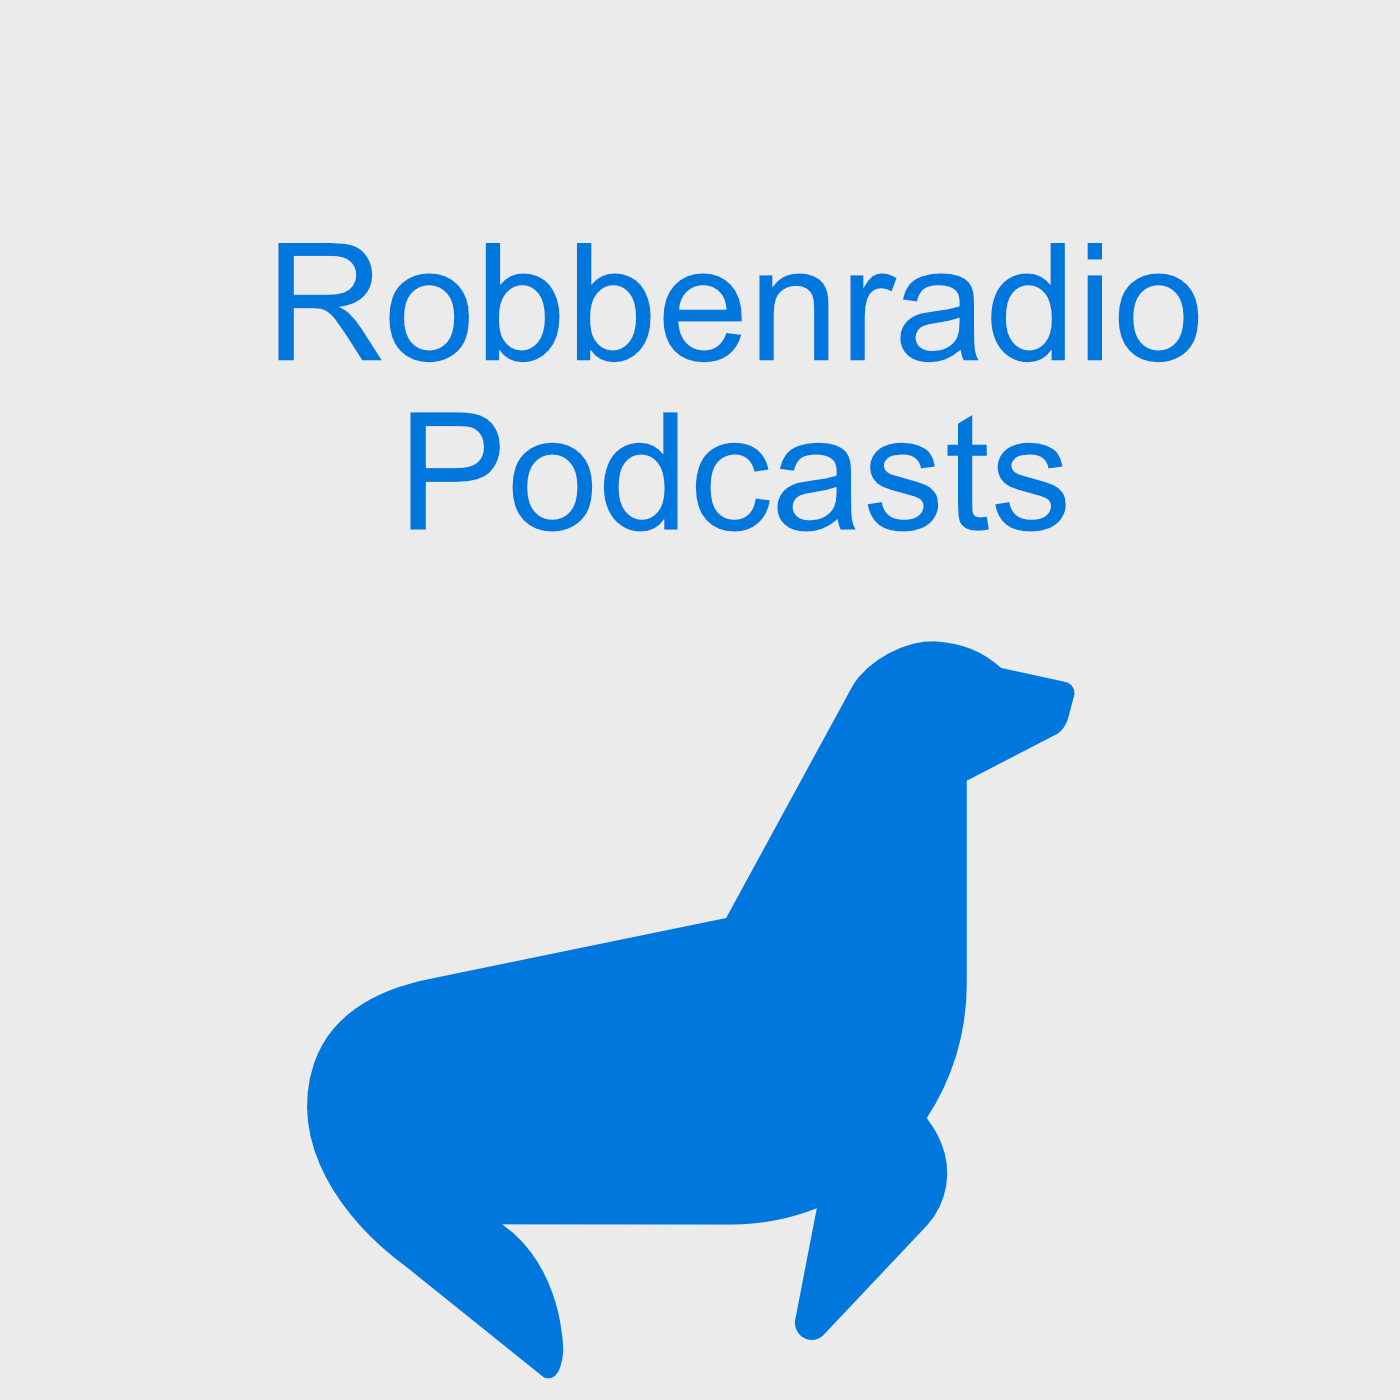 Robbenradio Podcasts